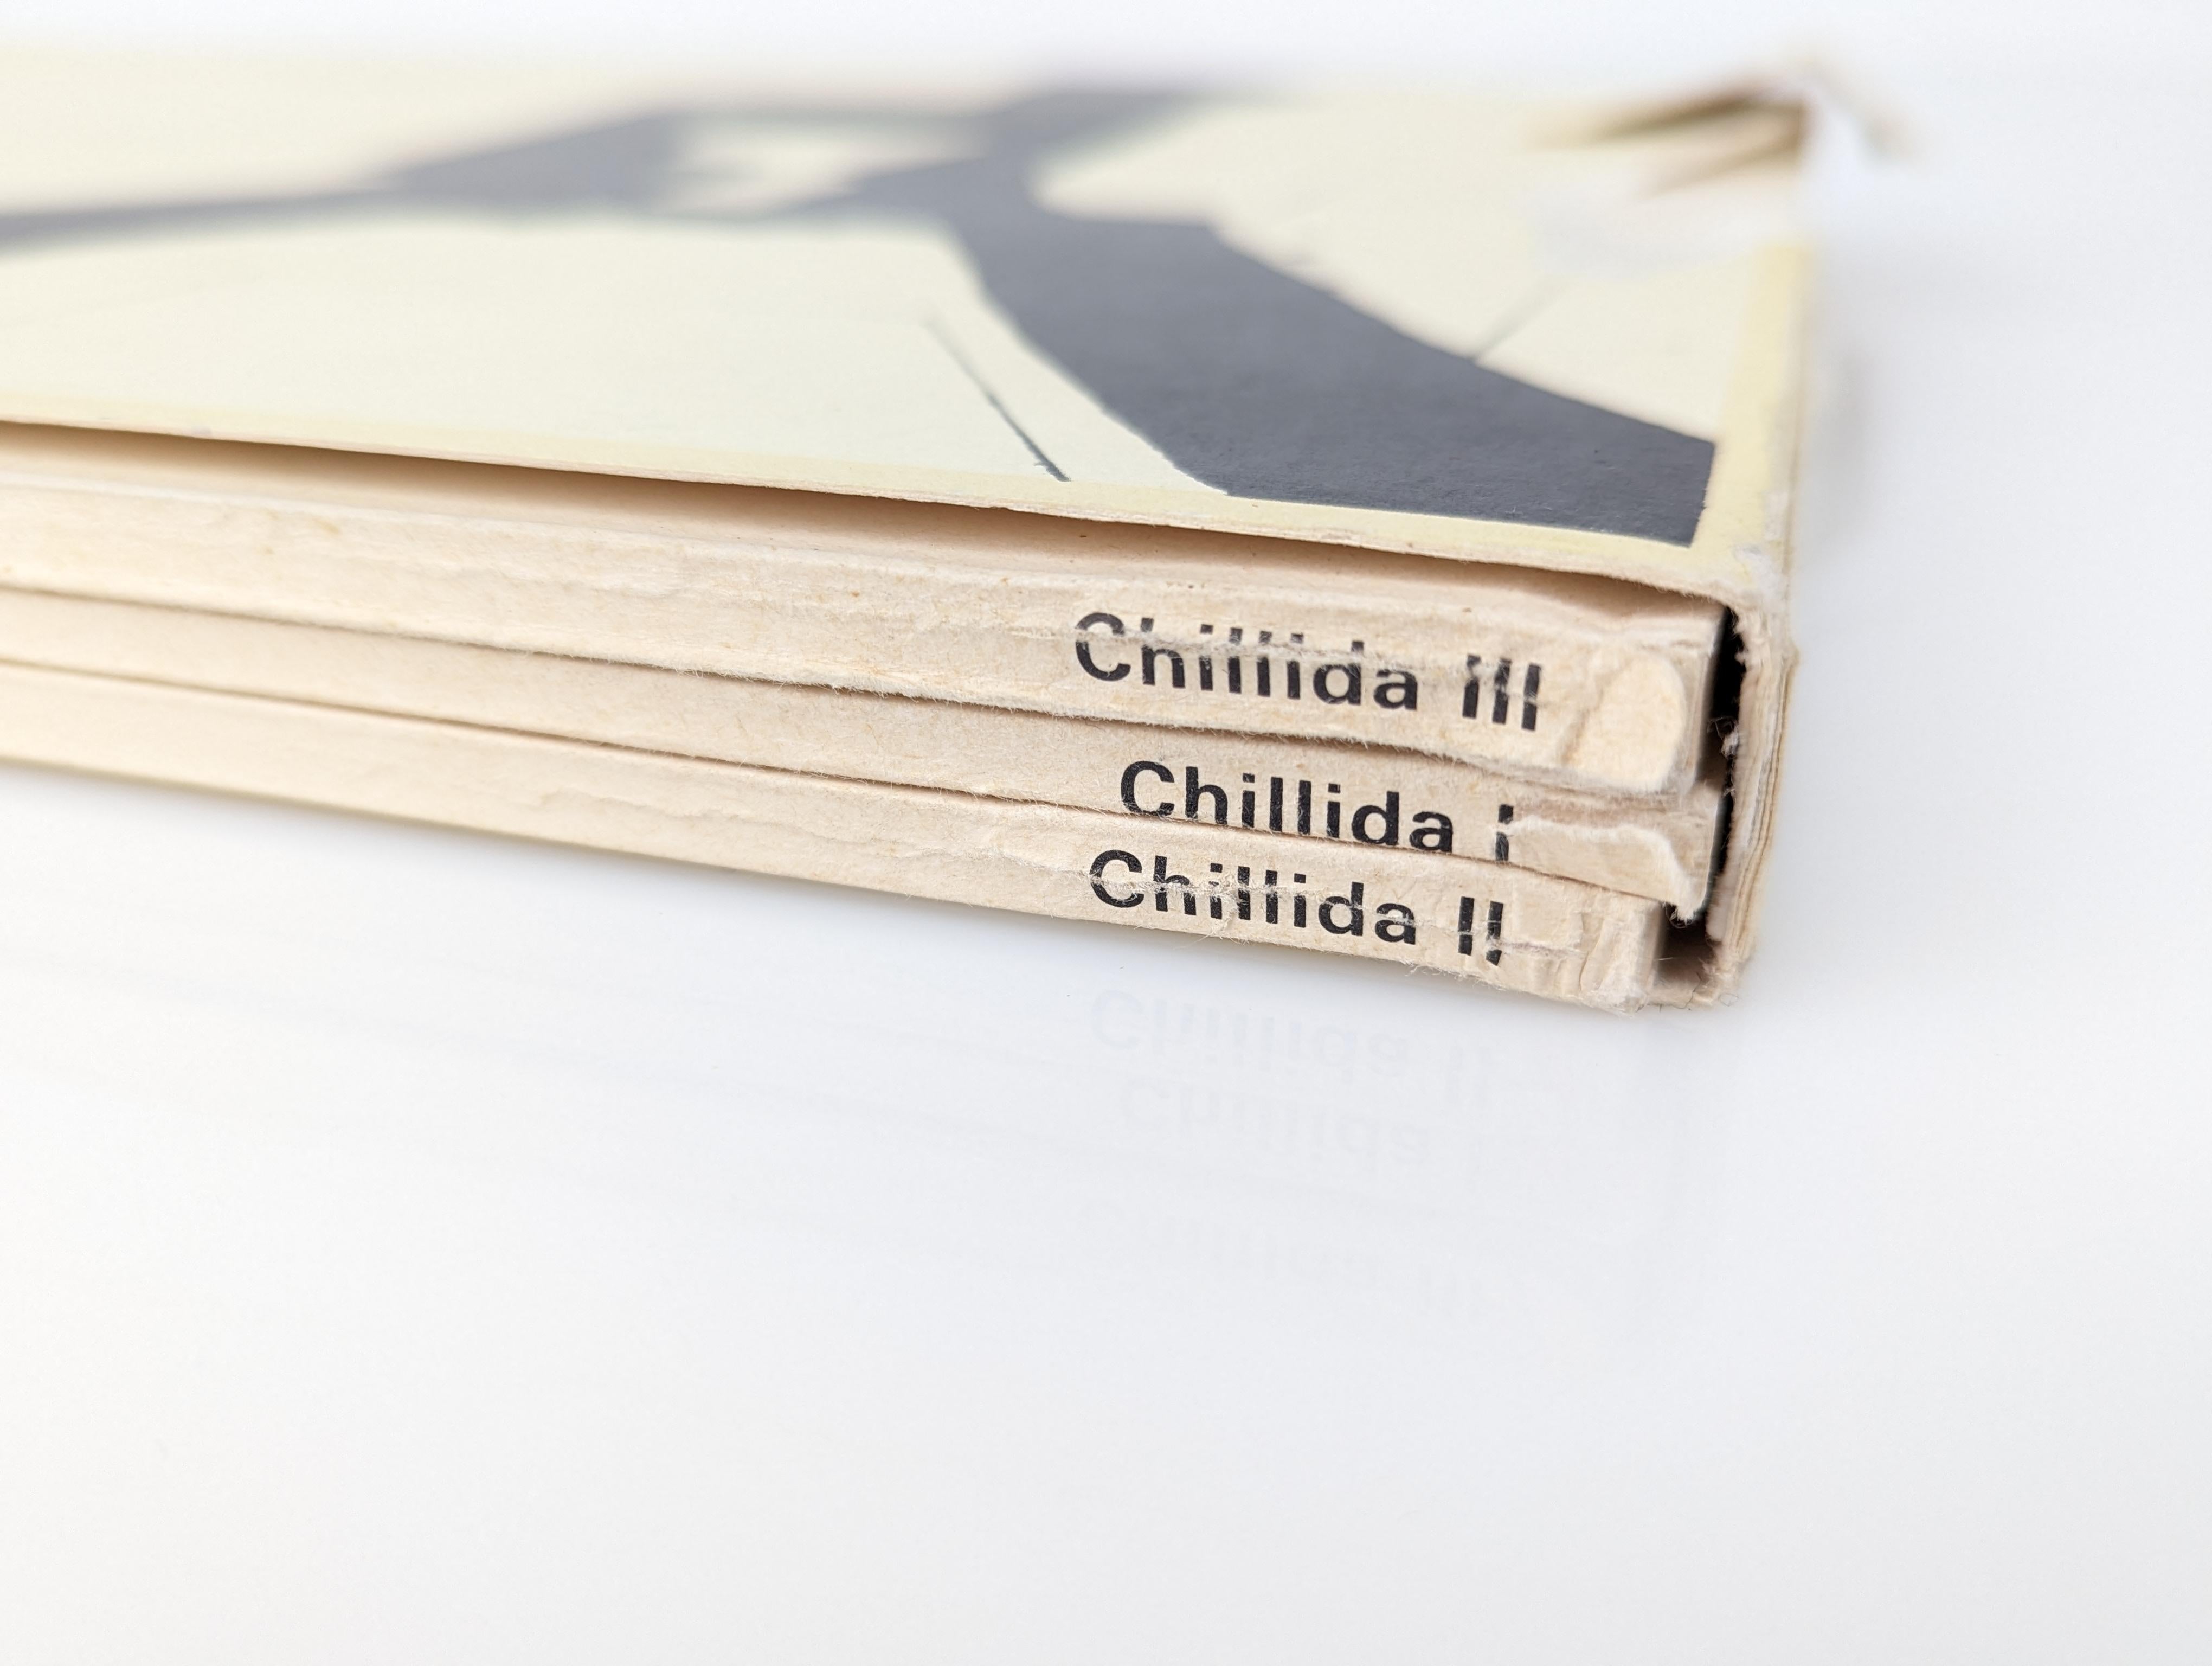 Spanish Eduardo Chillida by Werner Schmalenbach '3 Volumes', 1979